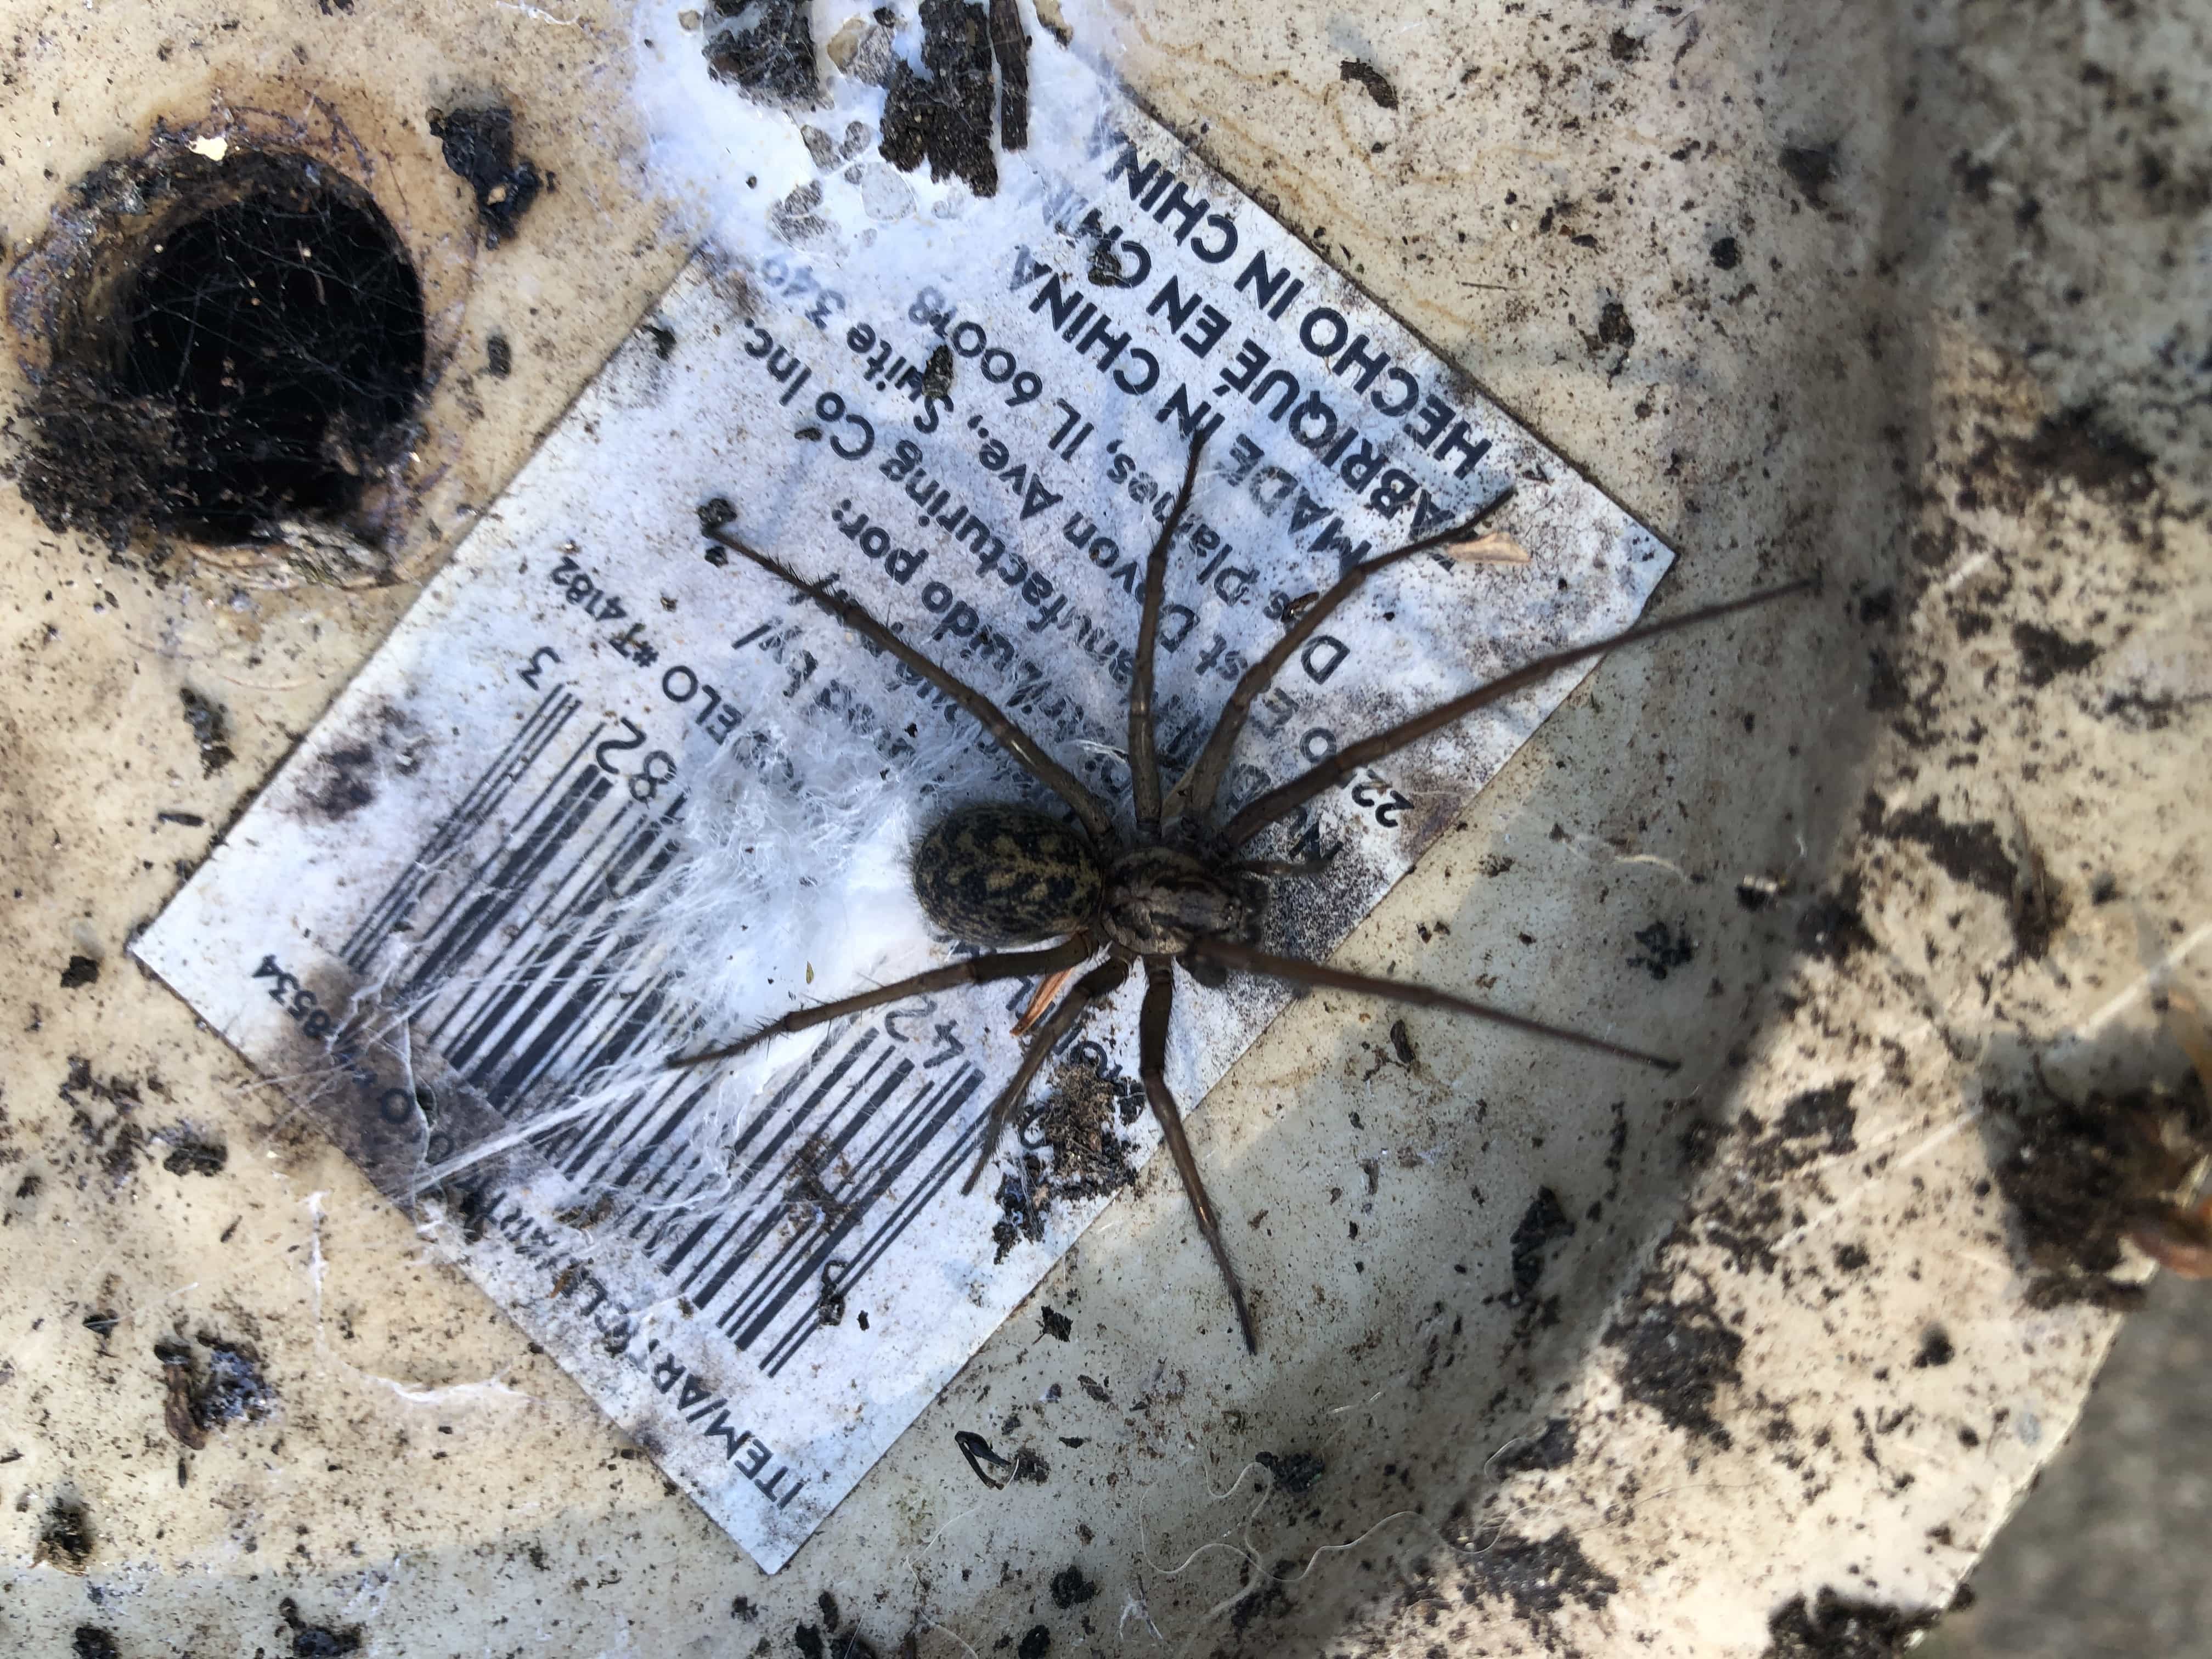 Picture of Eratigena duellica (Giant House Spider) - Dorsal